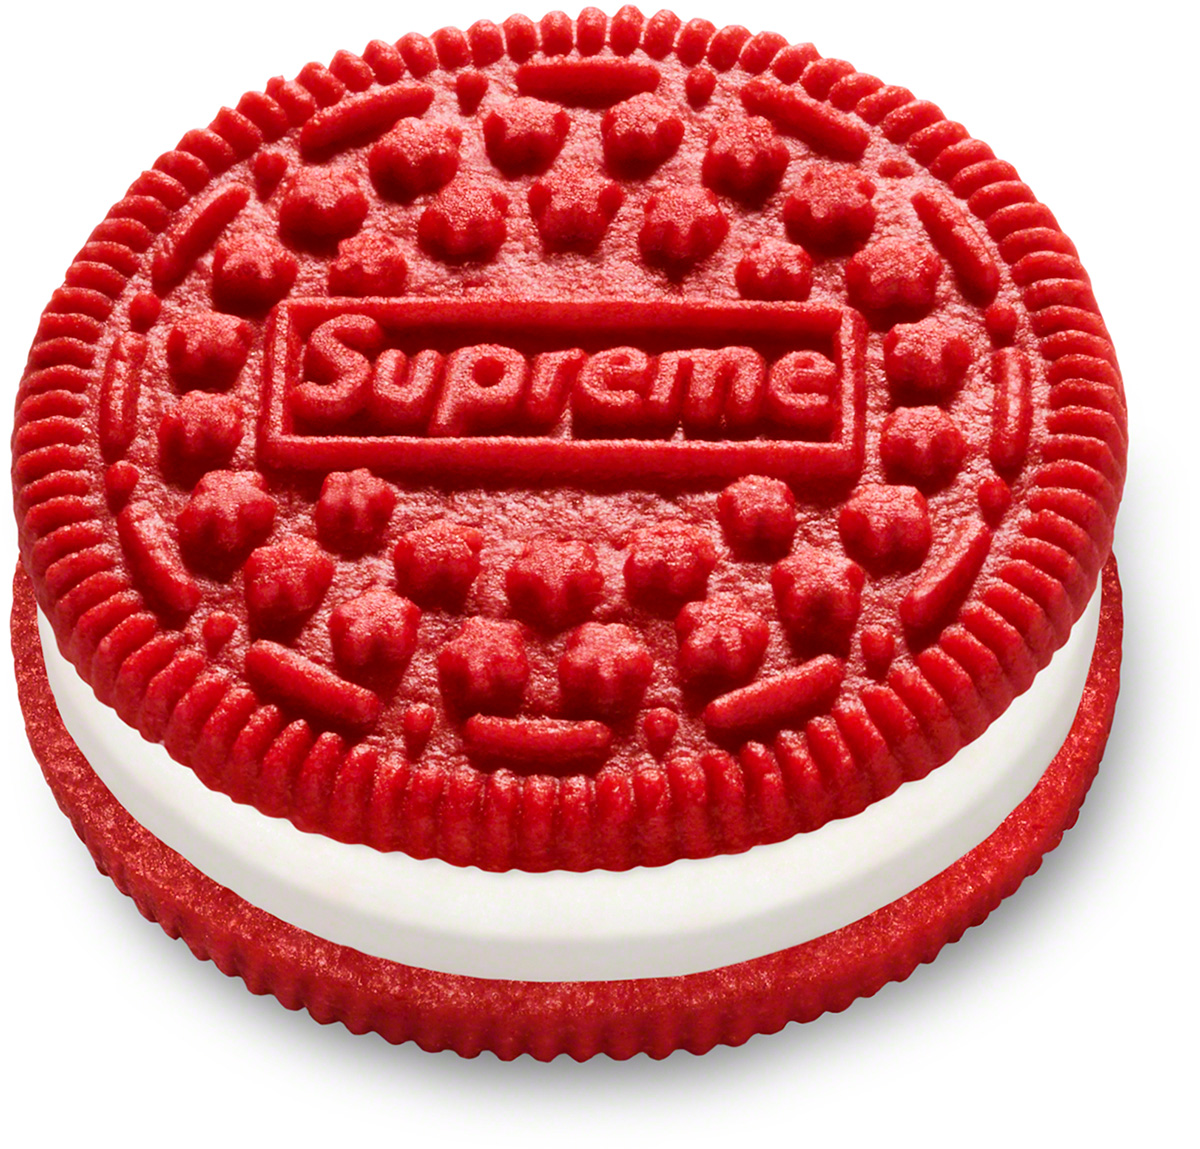 Supreme's new Oreo cookie collaboration. Image courtesy of supremenewyork.com.